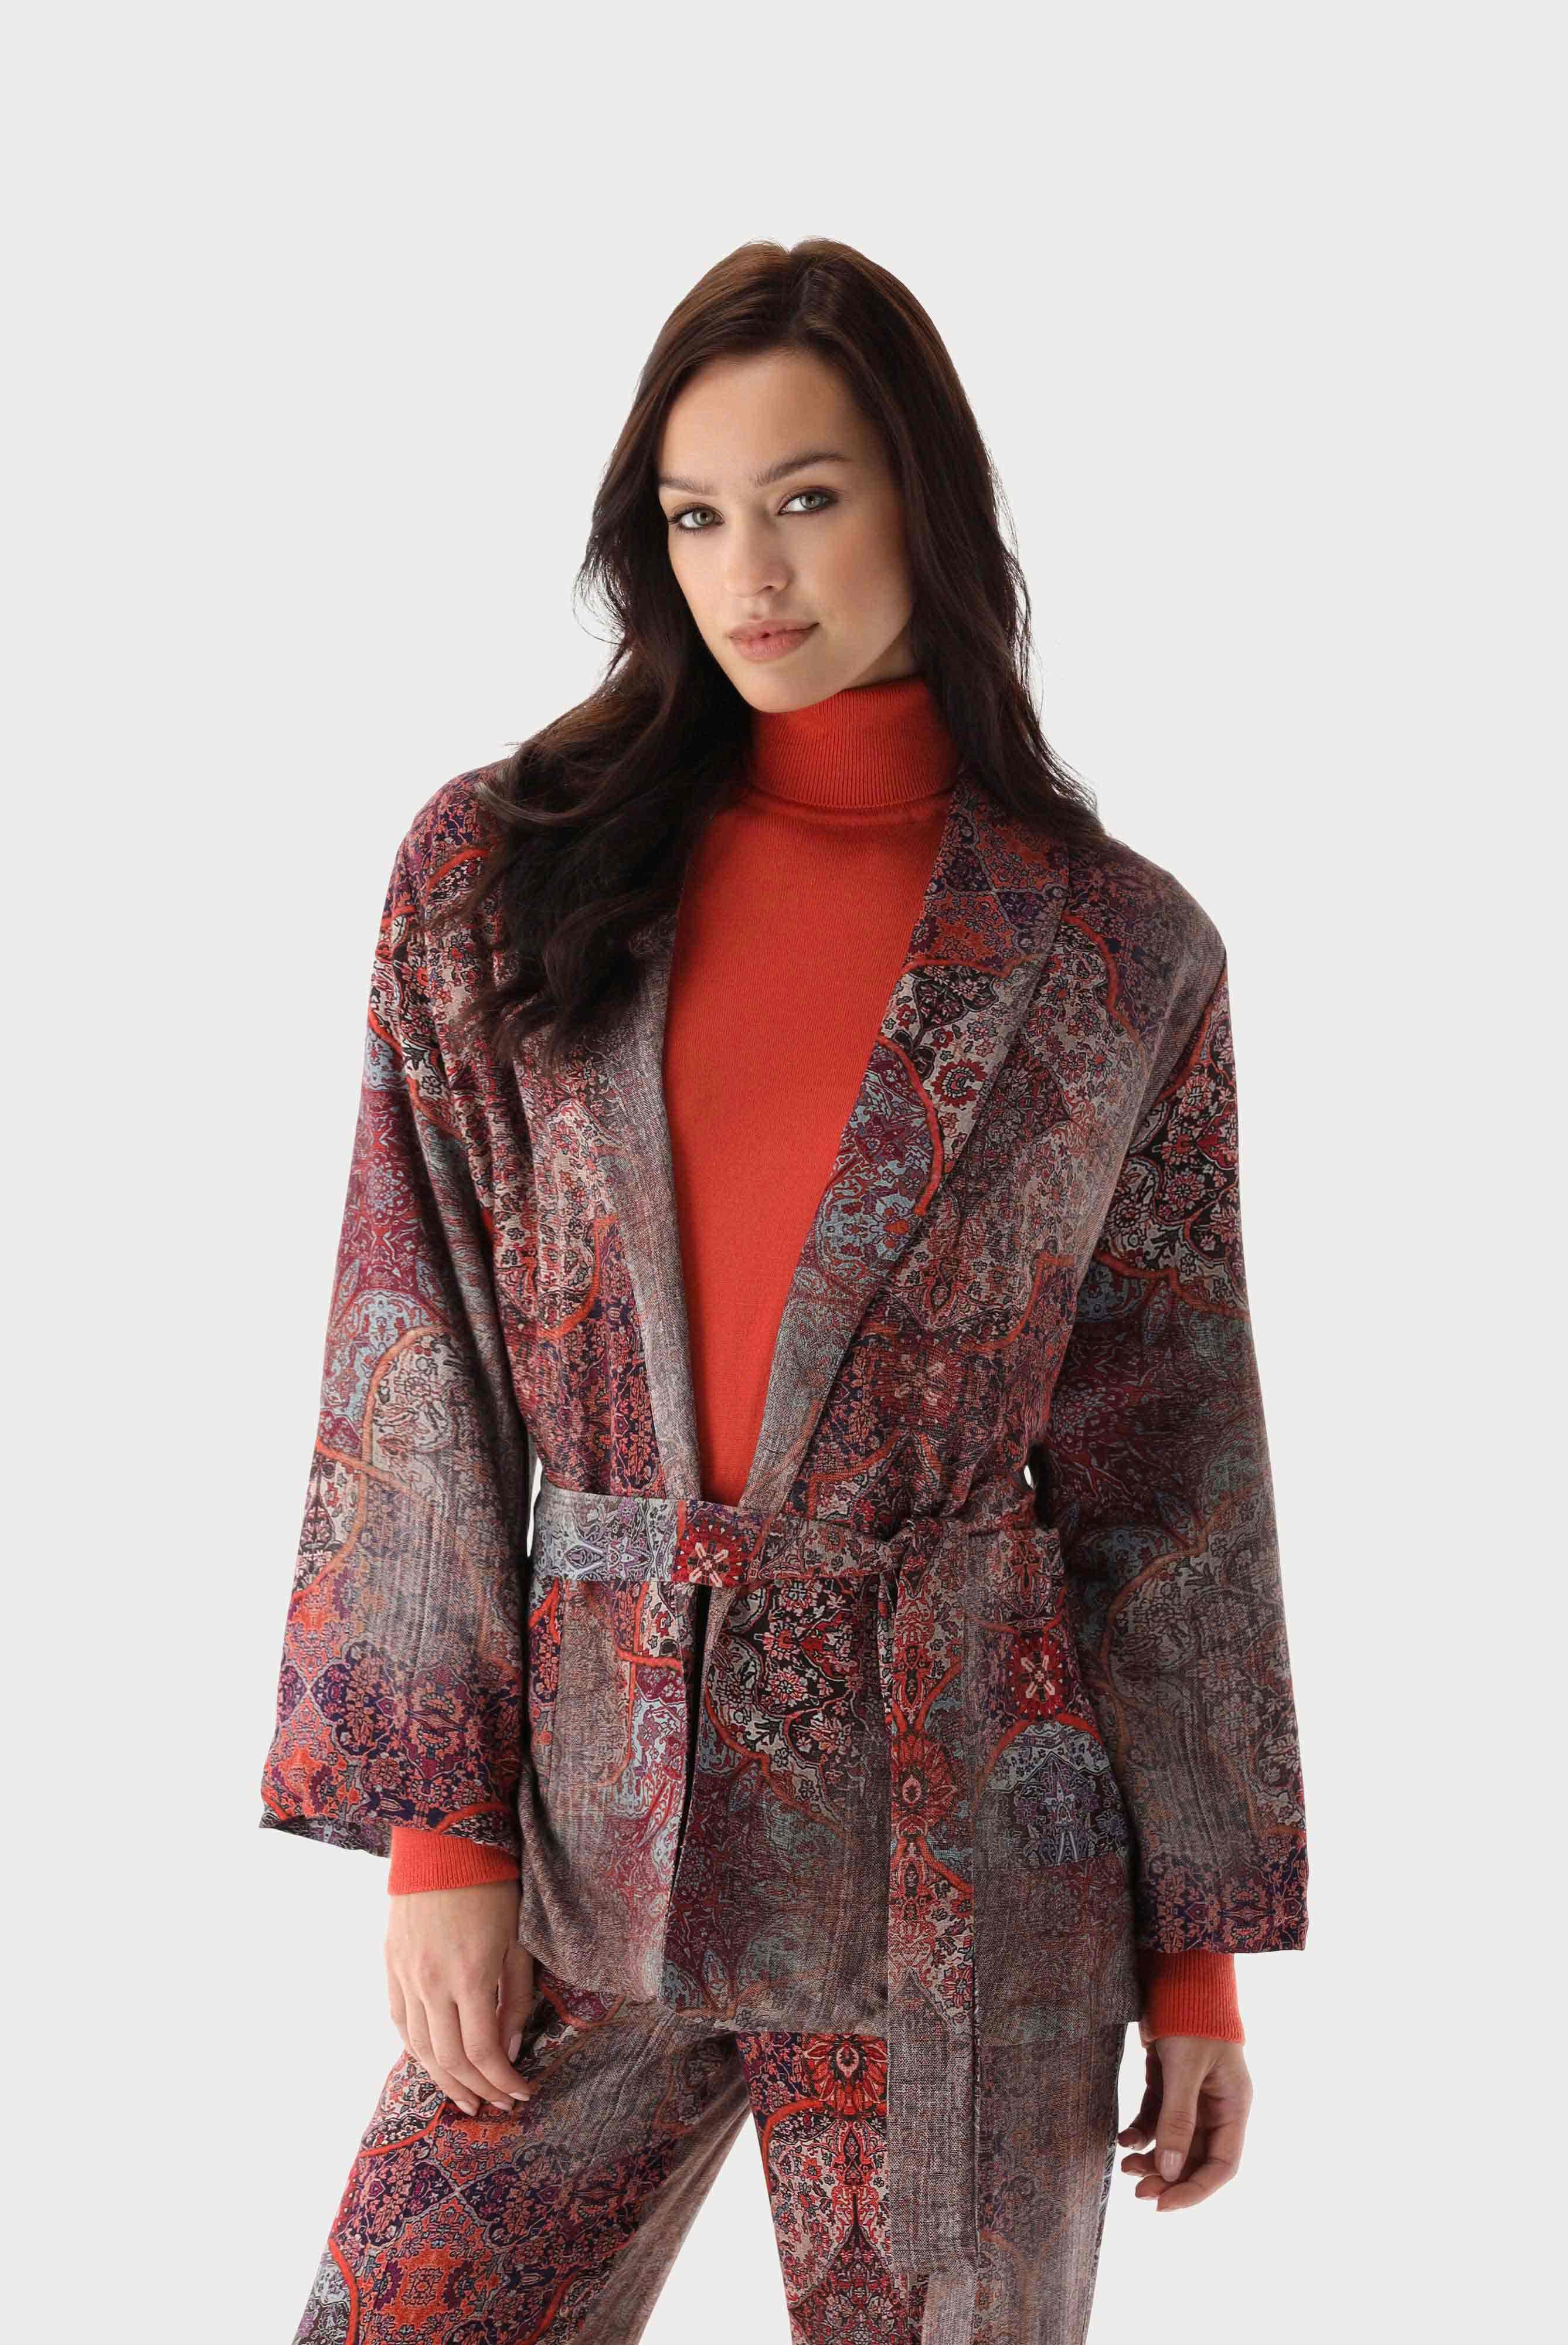 Blazers+Kimono with Vintage Print+05.658C.52.172026.357.34